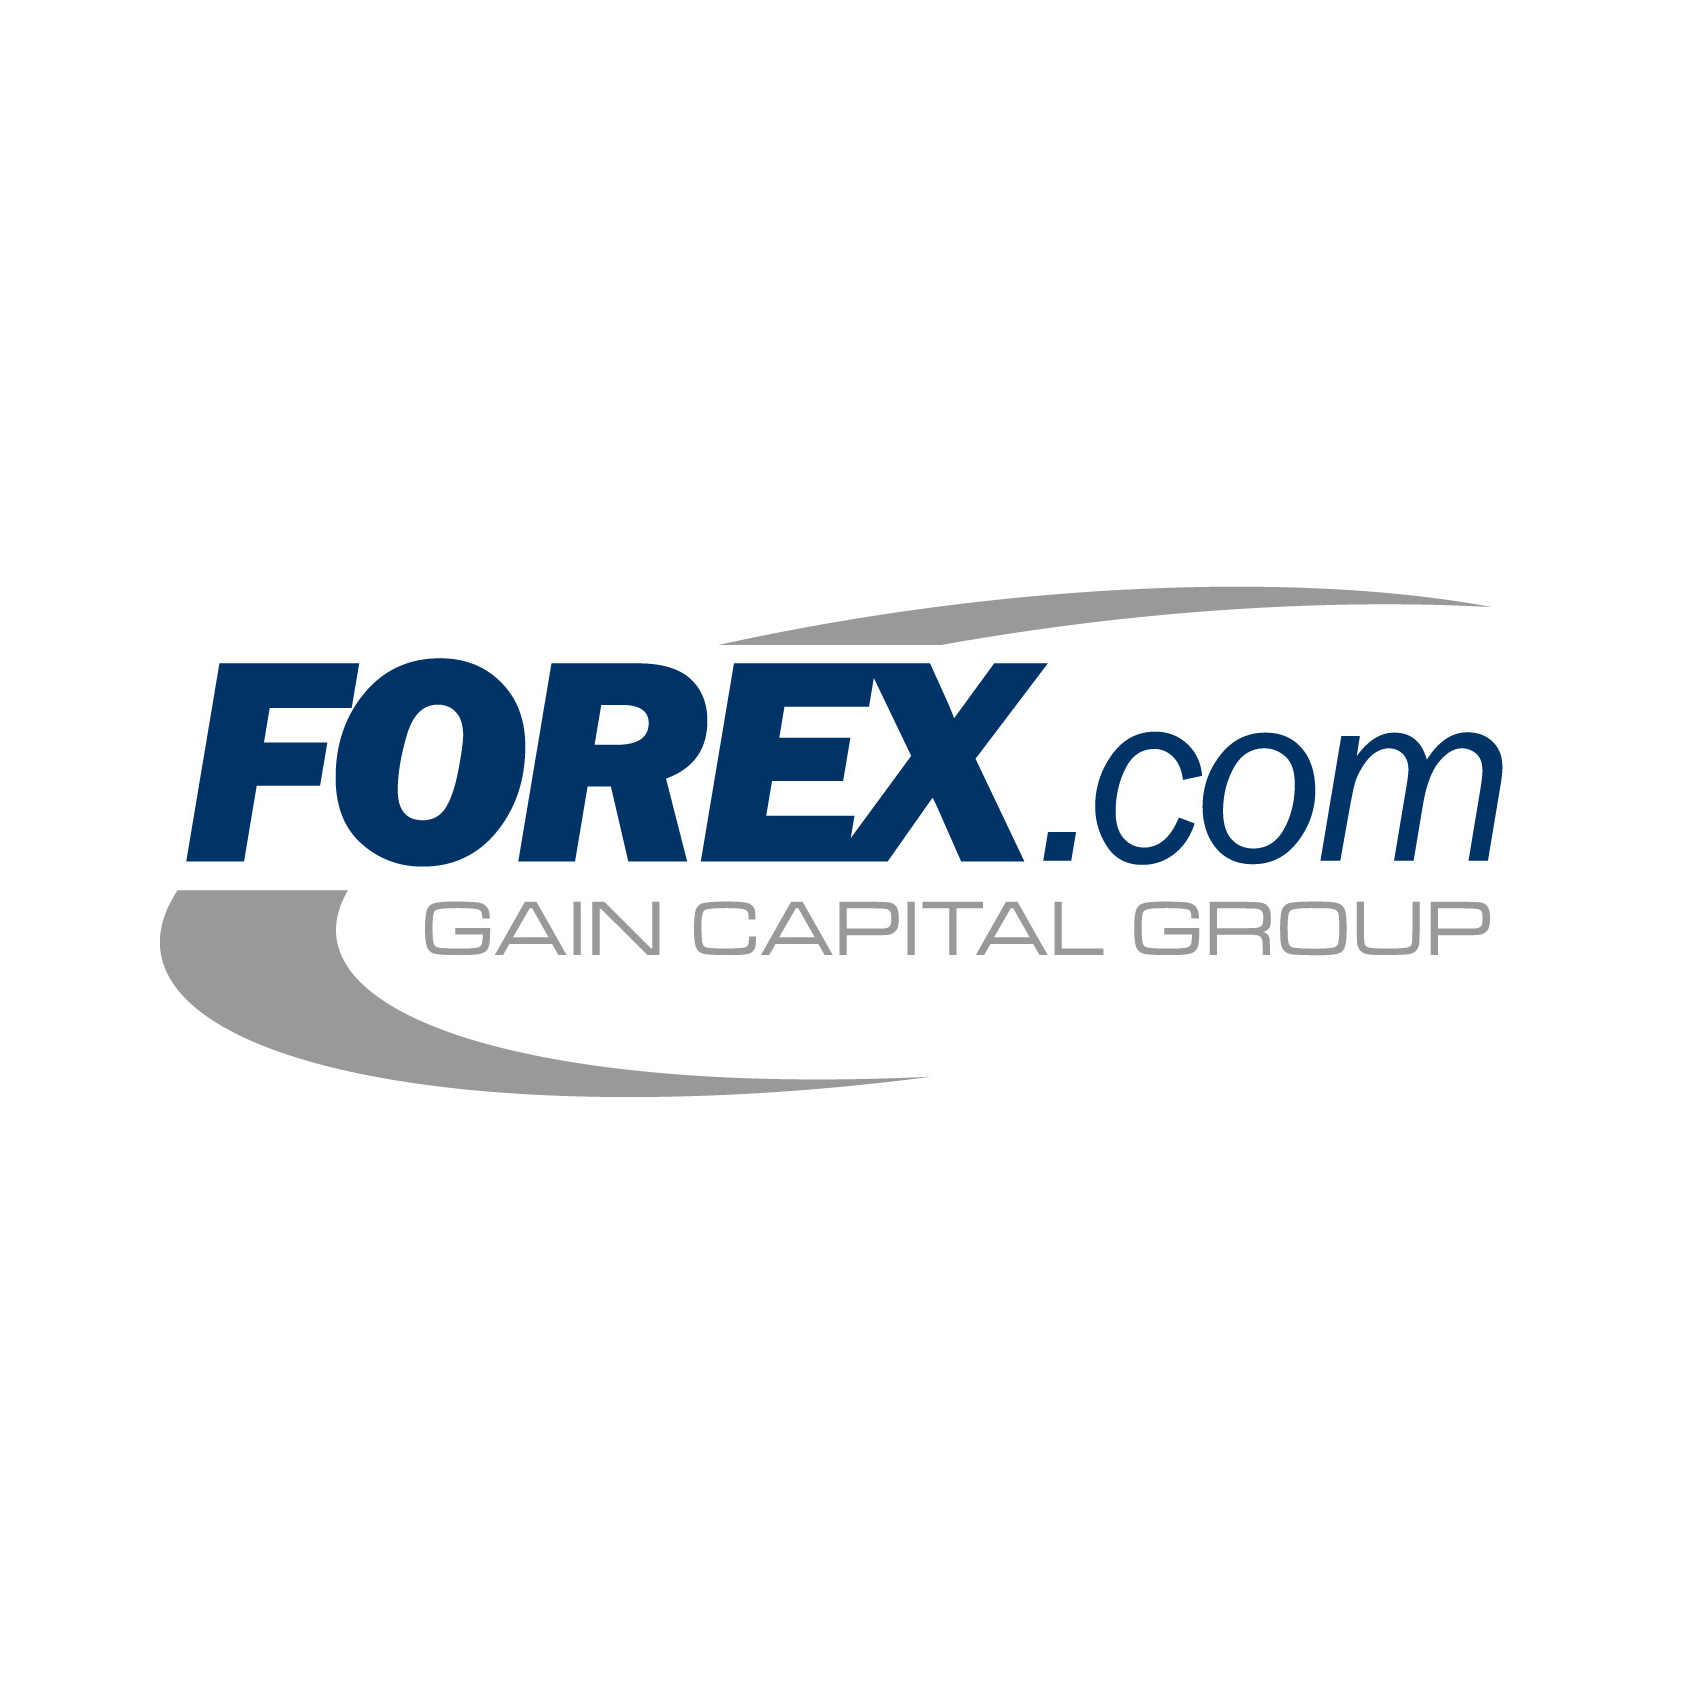 Forex com historical data